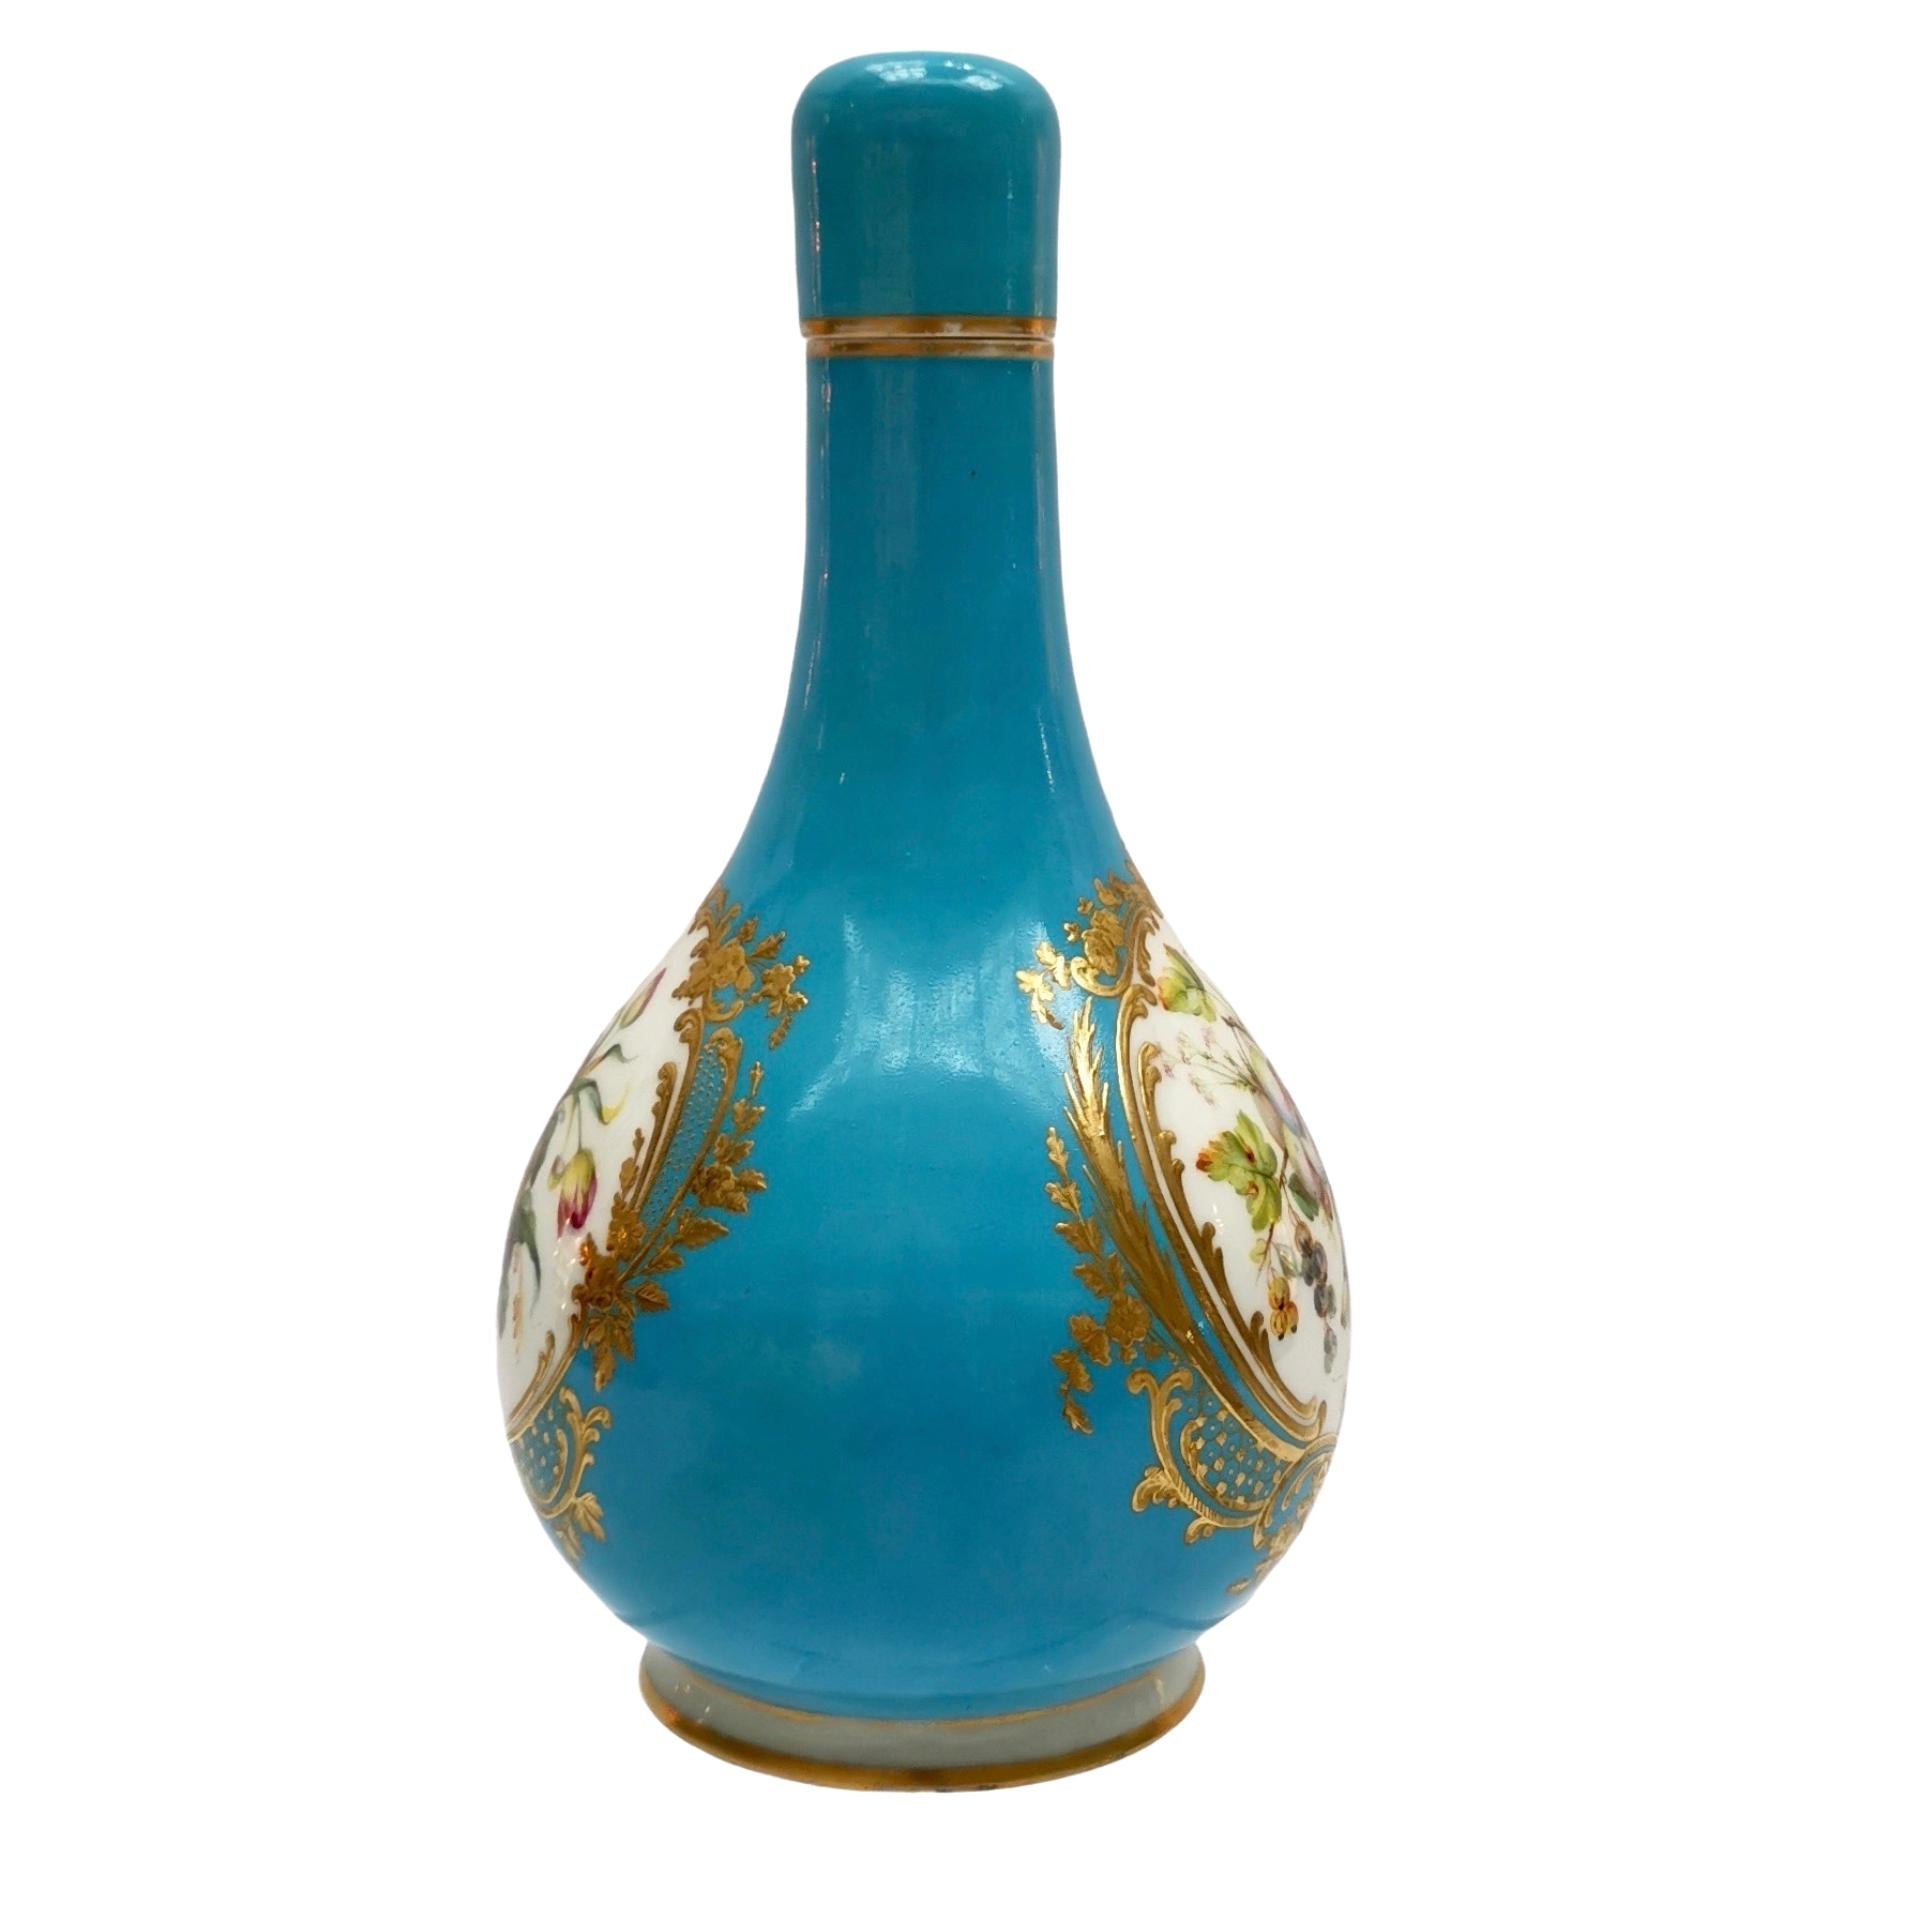 Victorian Coalport Porcelain Bottle Vase, Turquoise, Flowers by William Cook, circa 1855